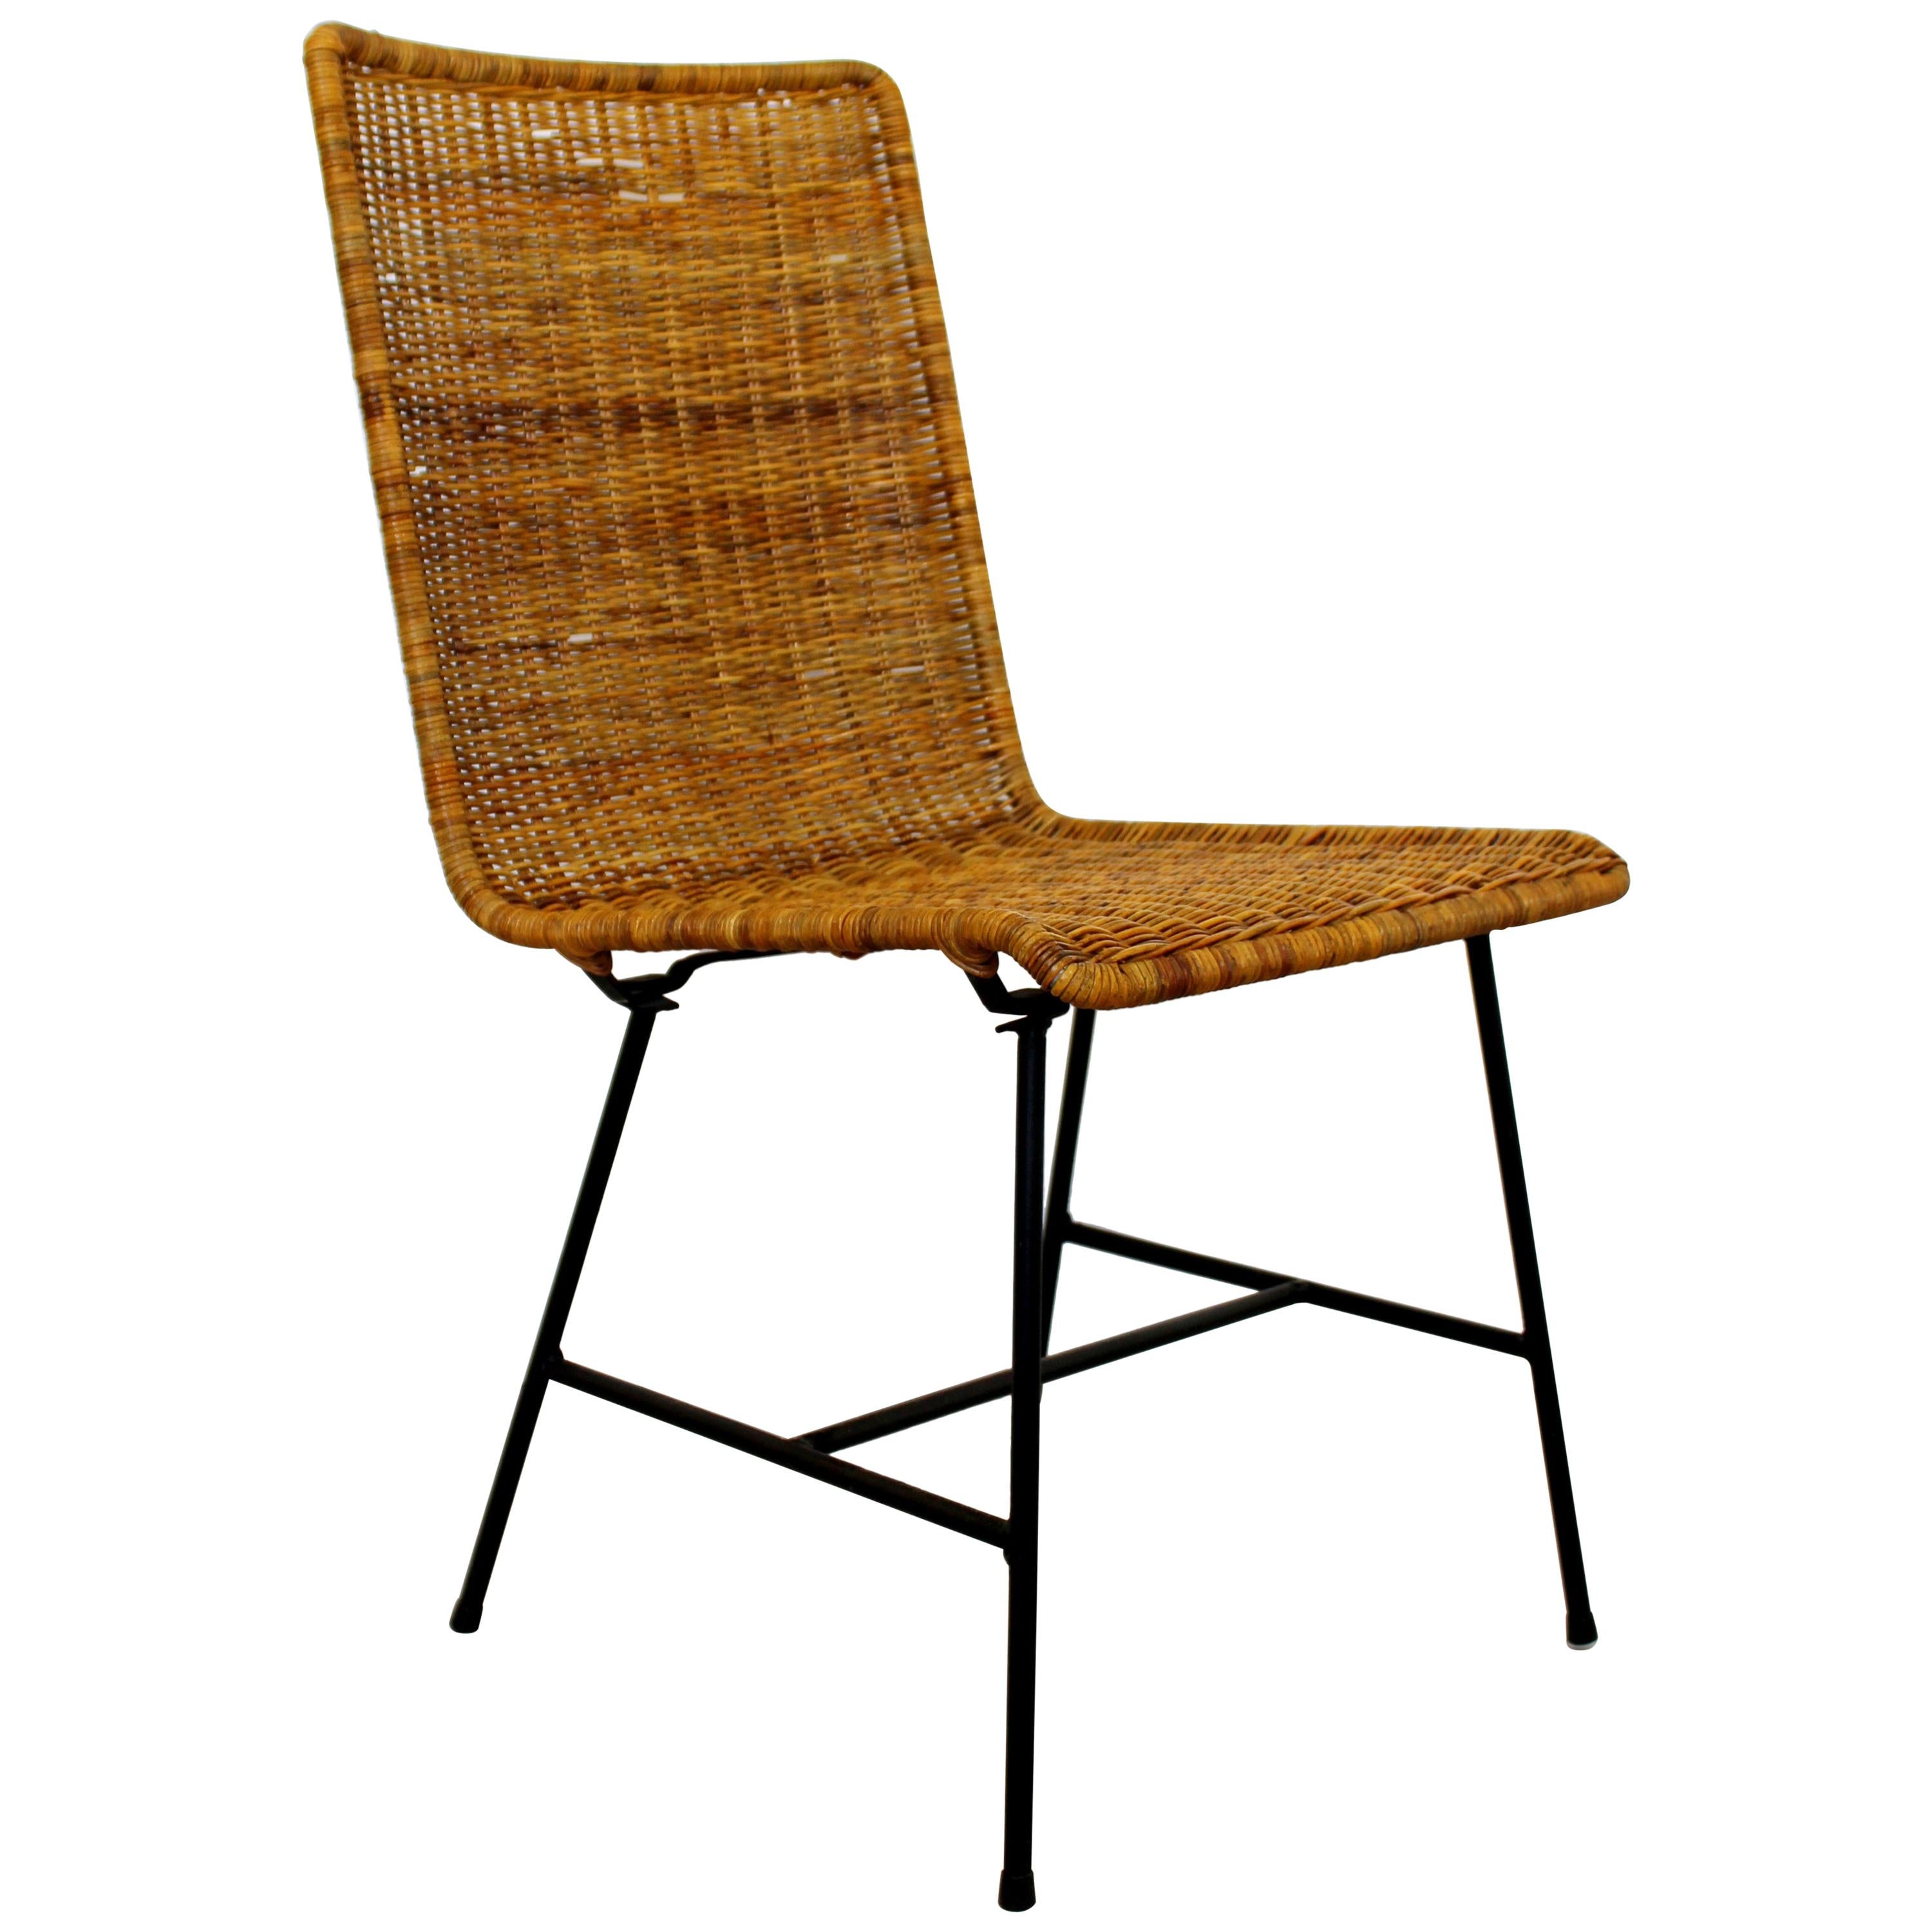 Mid-Century Modern Wicker Rattan Iron Side Chair, 1960s